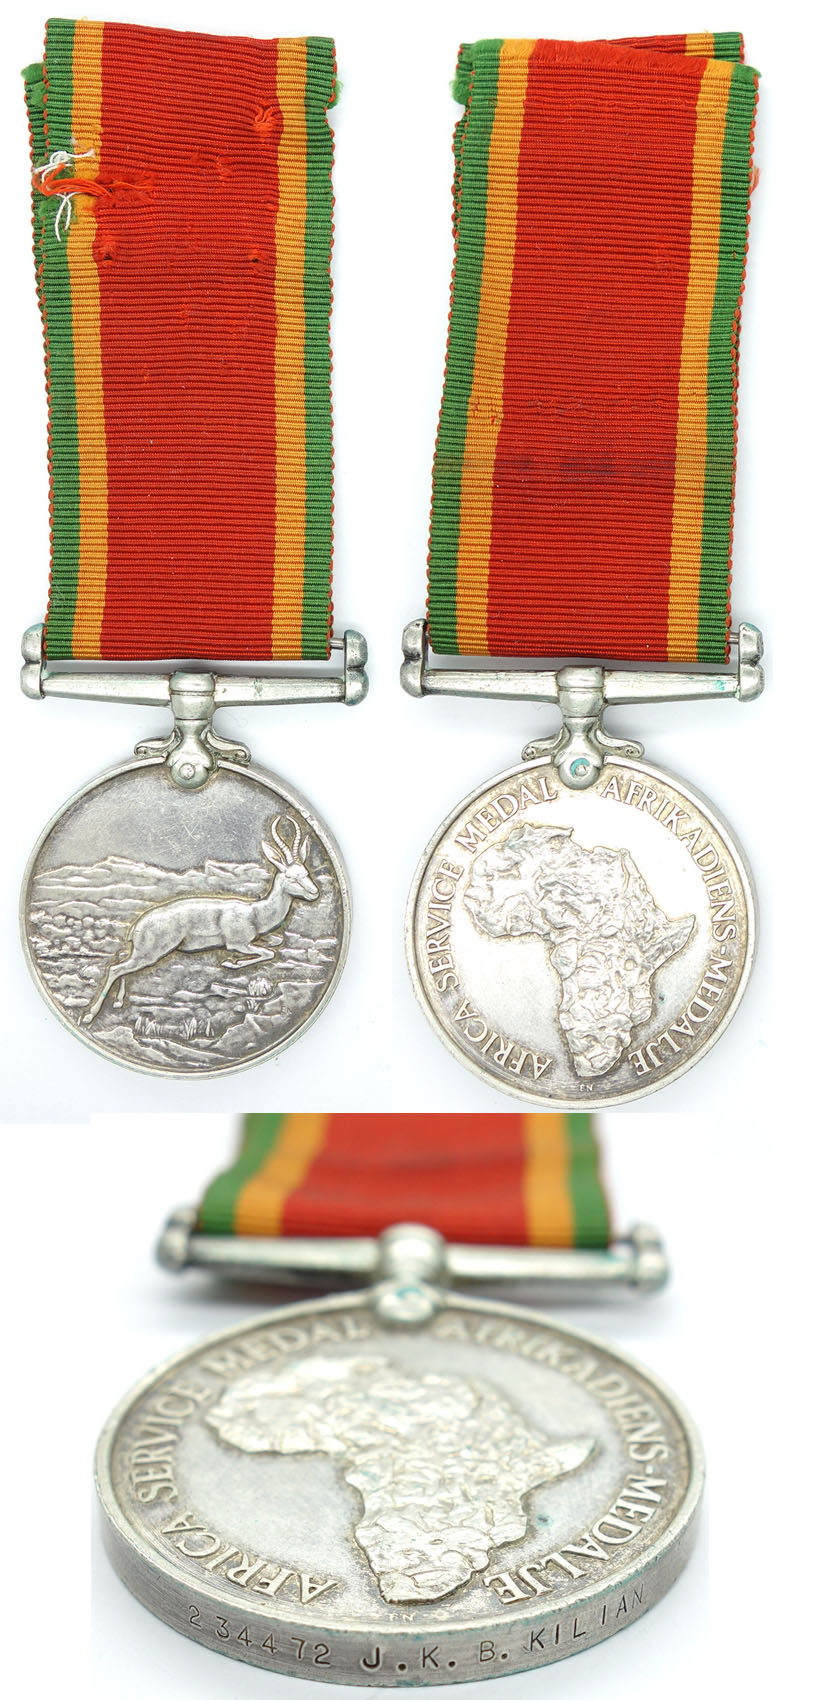 British Africa Service Medal